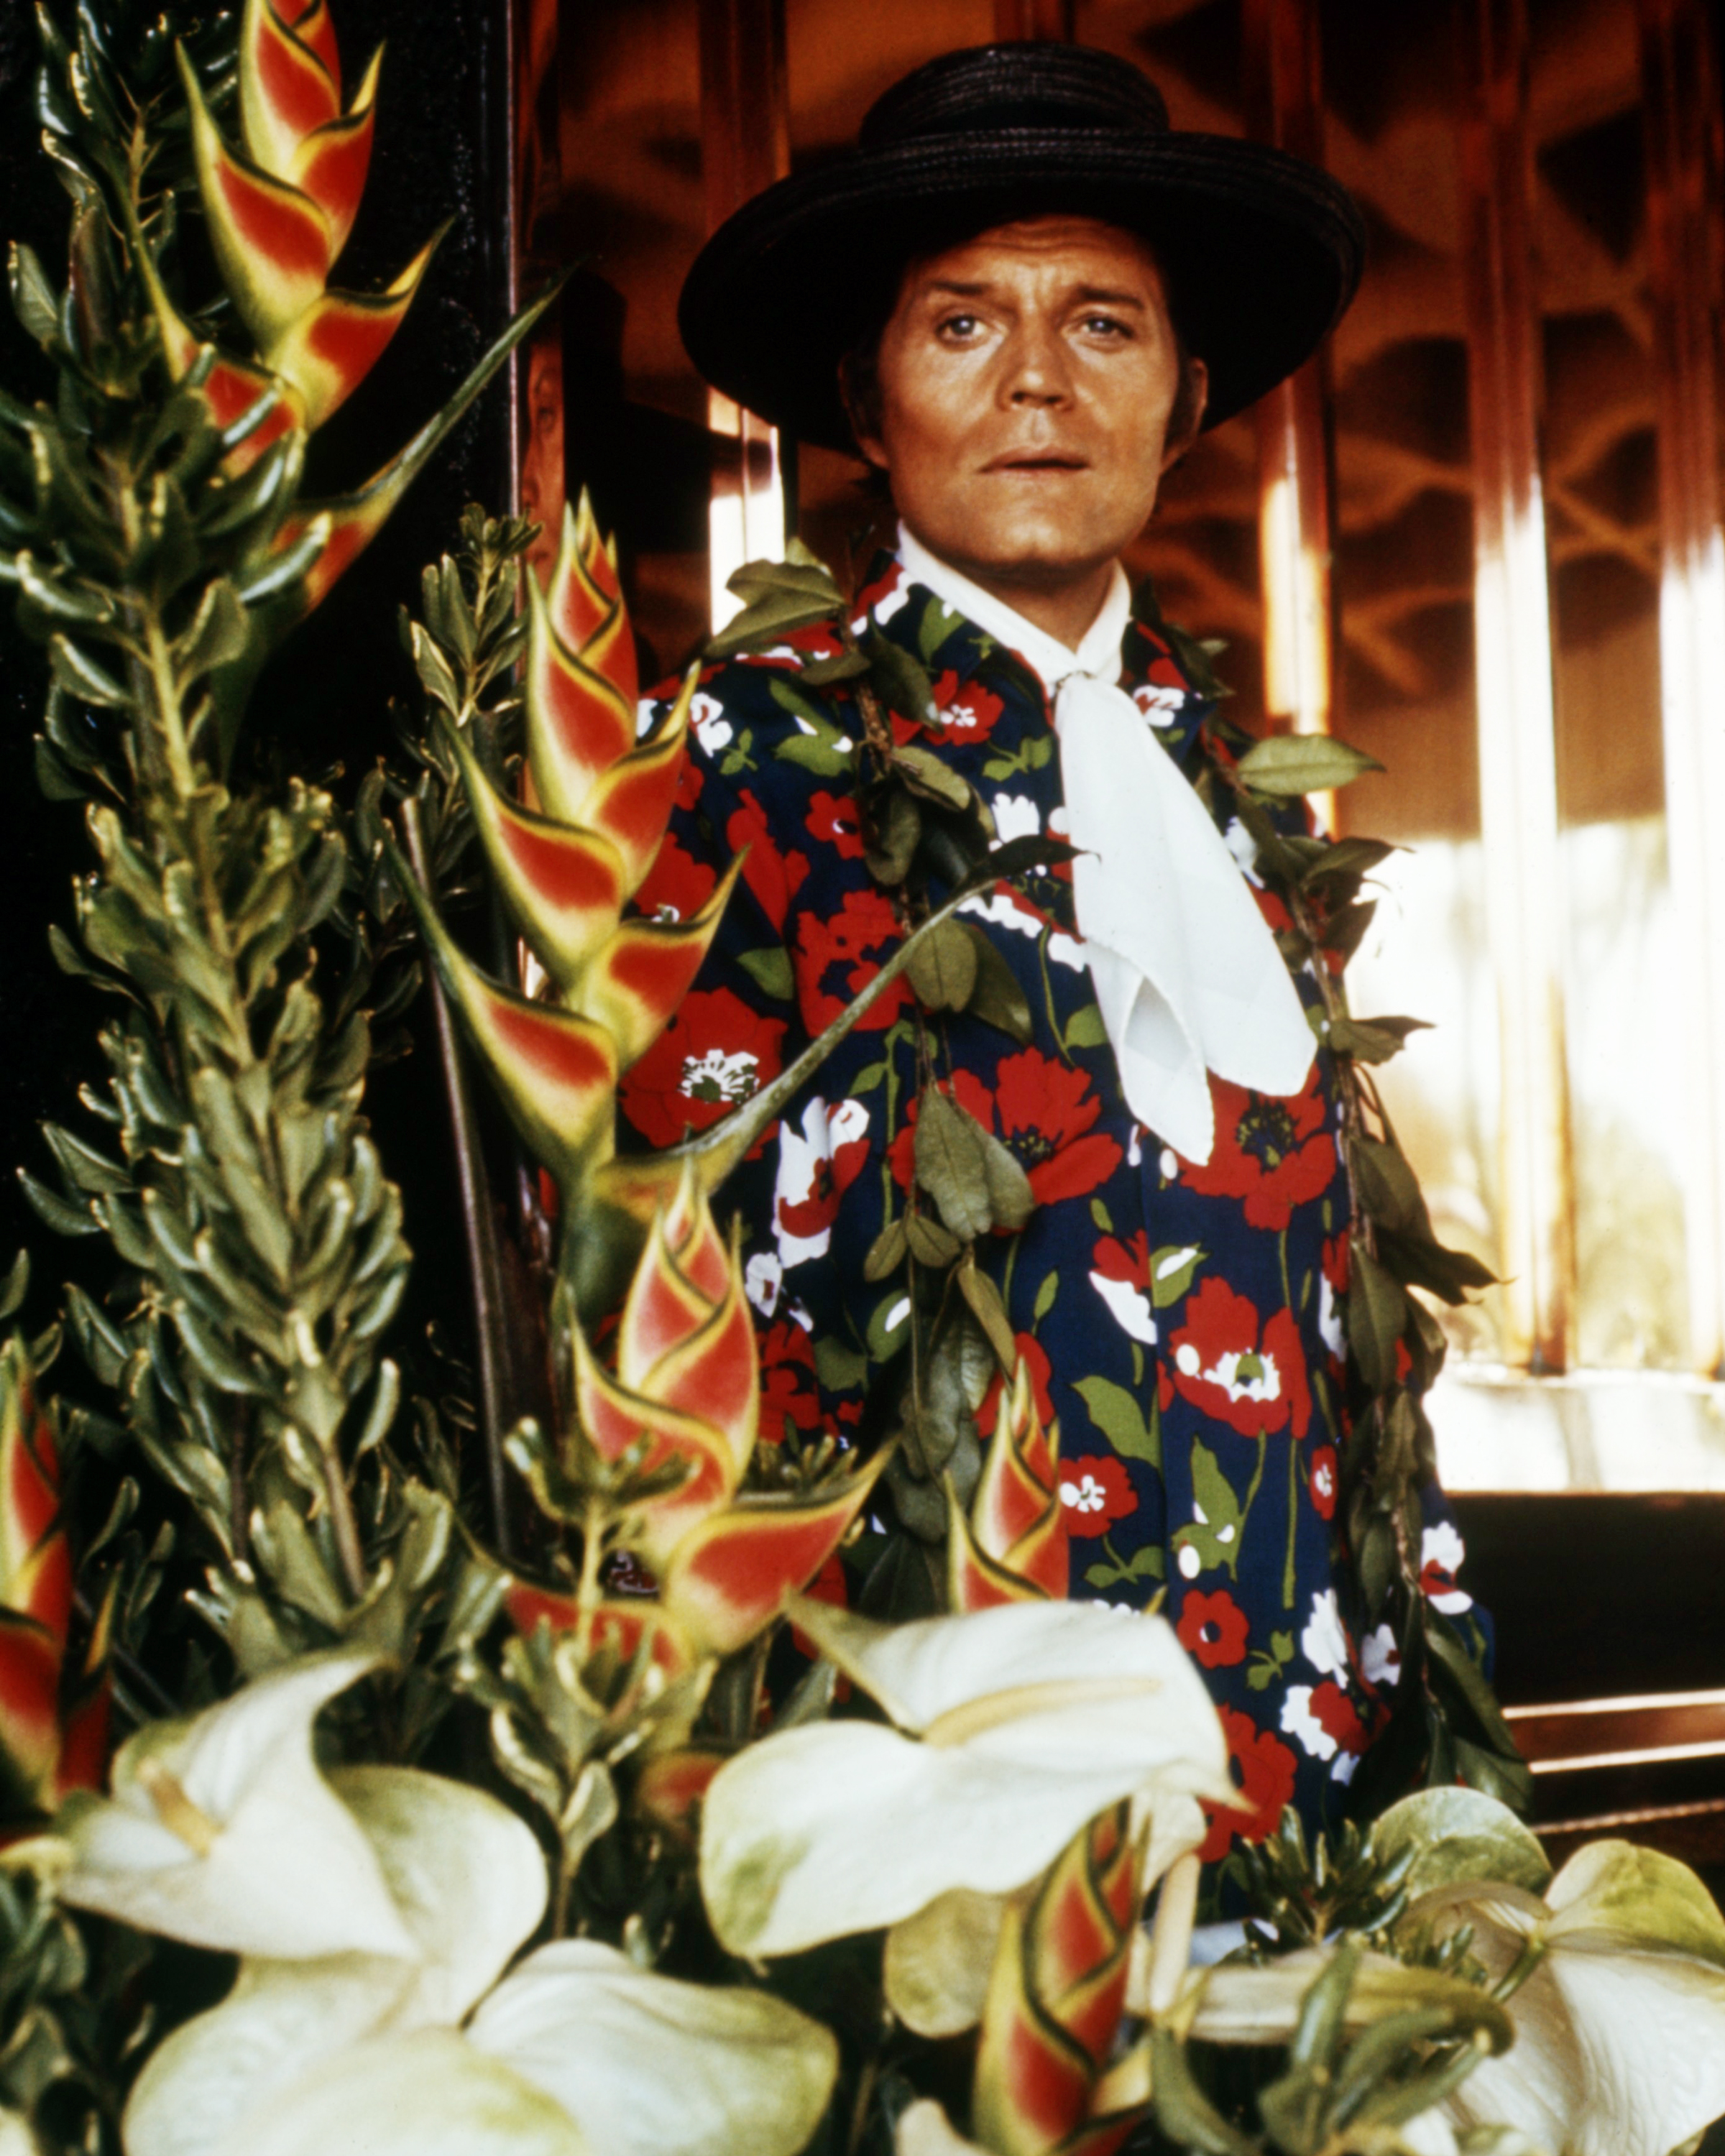 Jack Lord as Steve McGarrett in "Hawaii Five-O" circa 1975. | Source: Getty Images